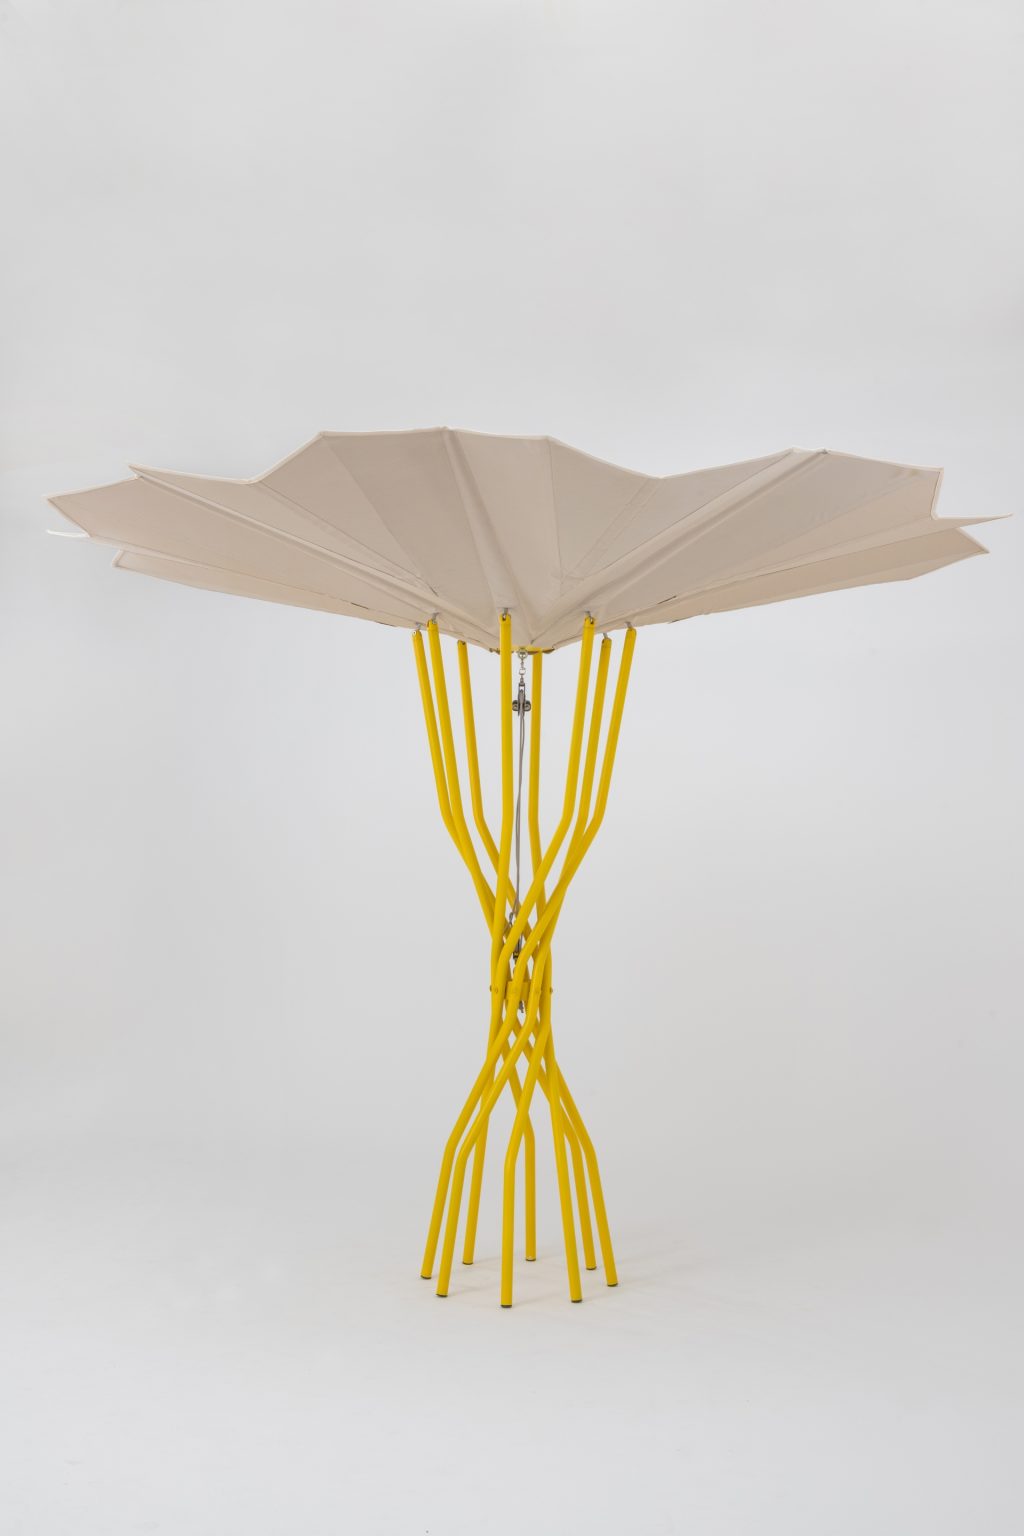 Photovoltaic umbrellas sustainable lido of the future Sammontana, design Carlo Ratti Associati